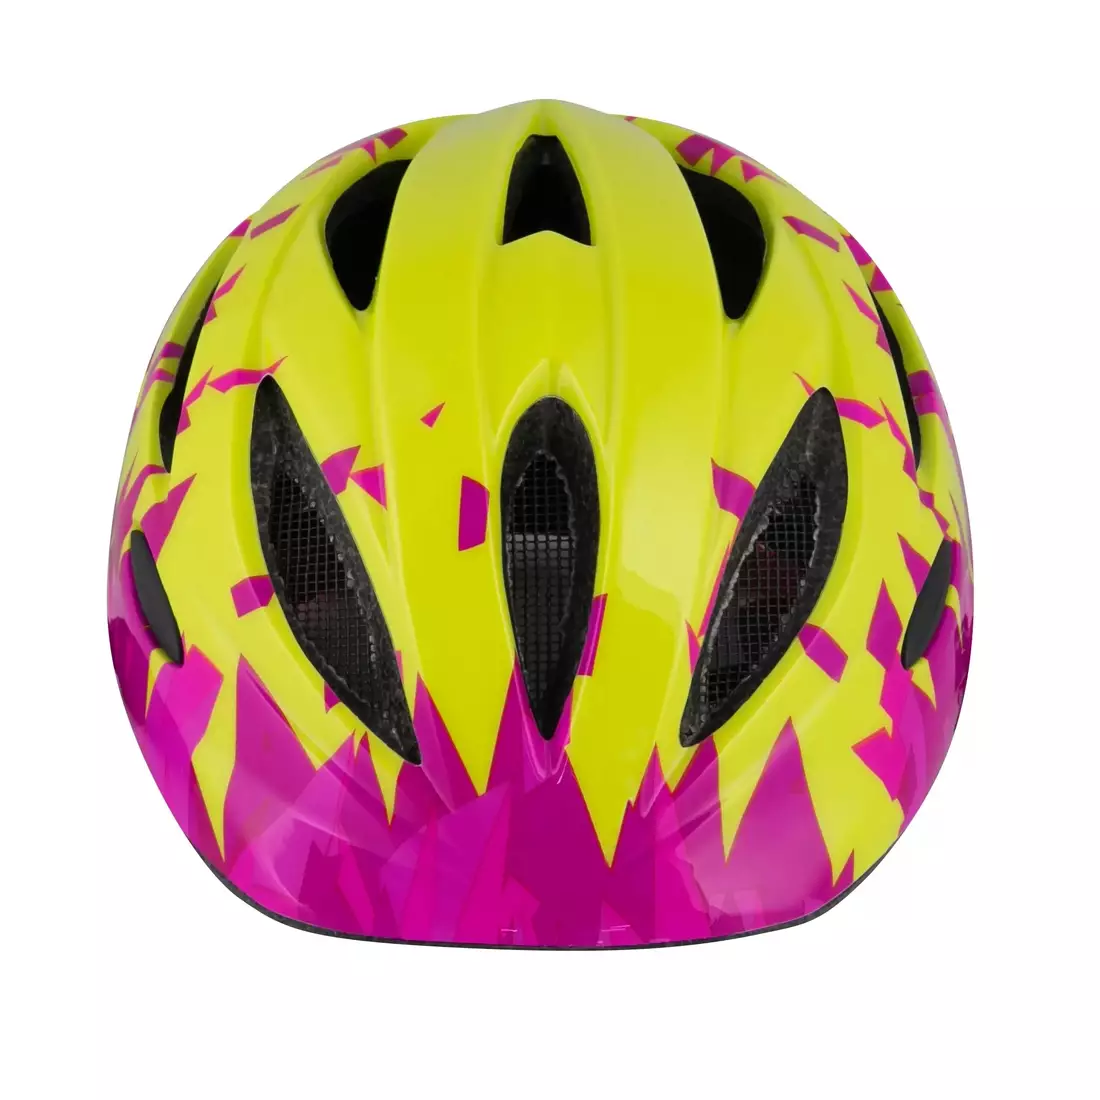 FORCE Children's bicycle helmet ANT, fluo-pink 902634